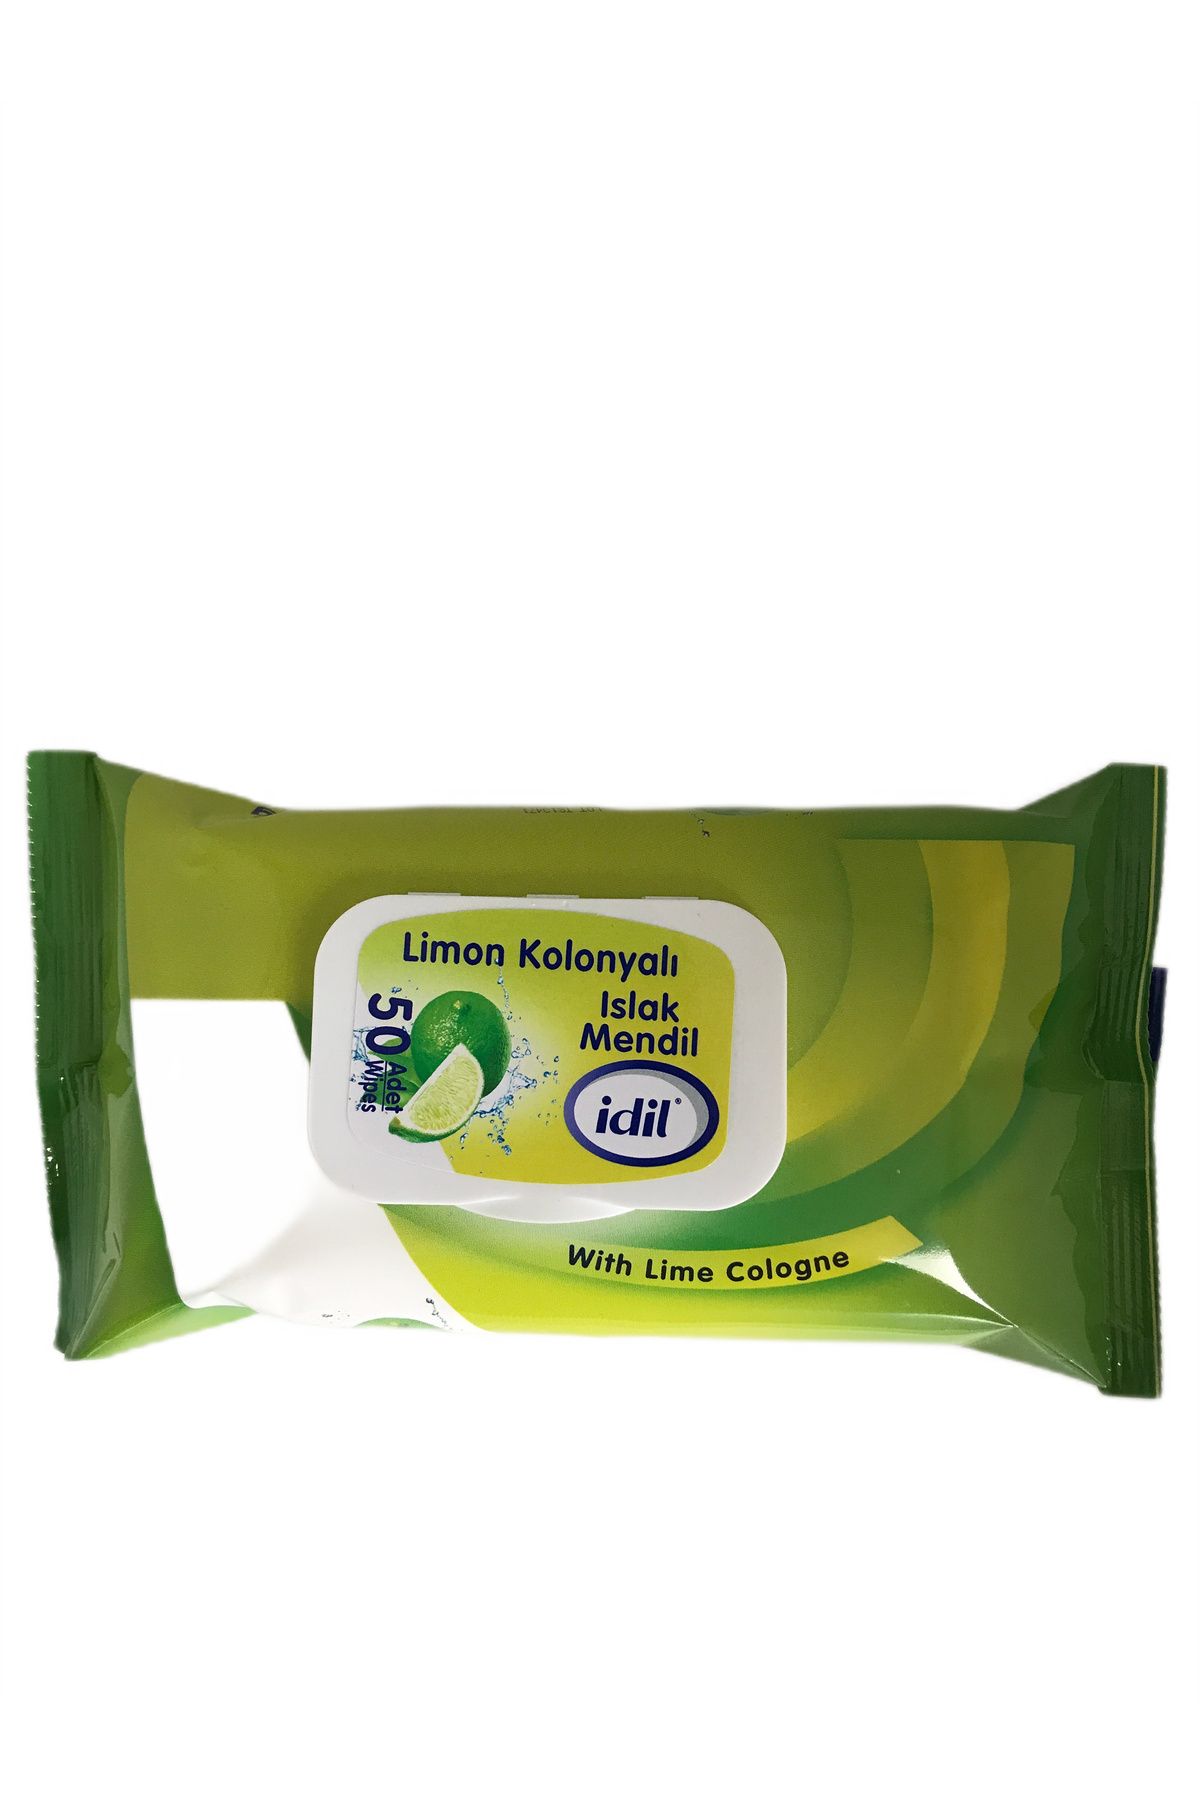 İDİL Limon Kolonyalı Islak Mendil 50 Li X 20 Adet (1000 YAPRAK)